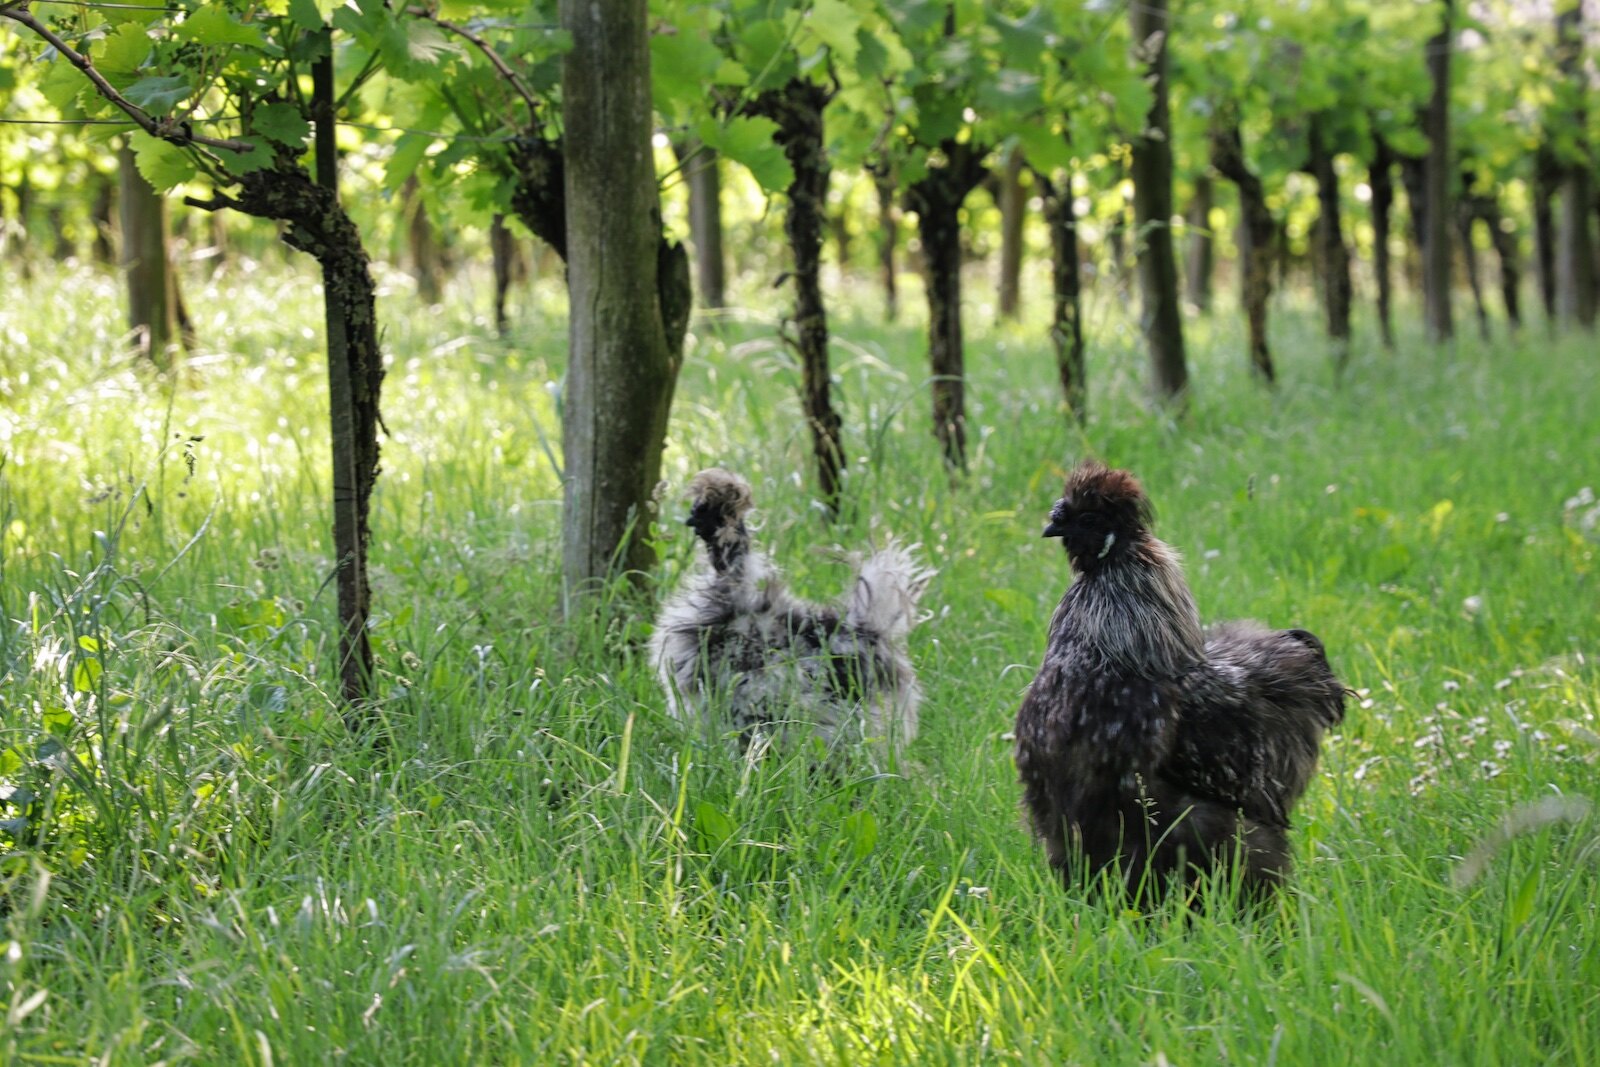 Chickens in the vineyard at Wijngoed Montferland